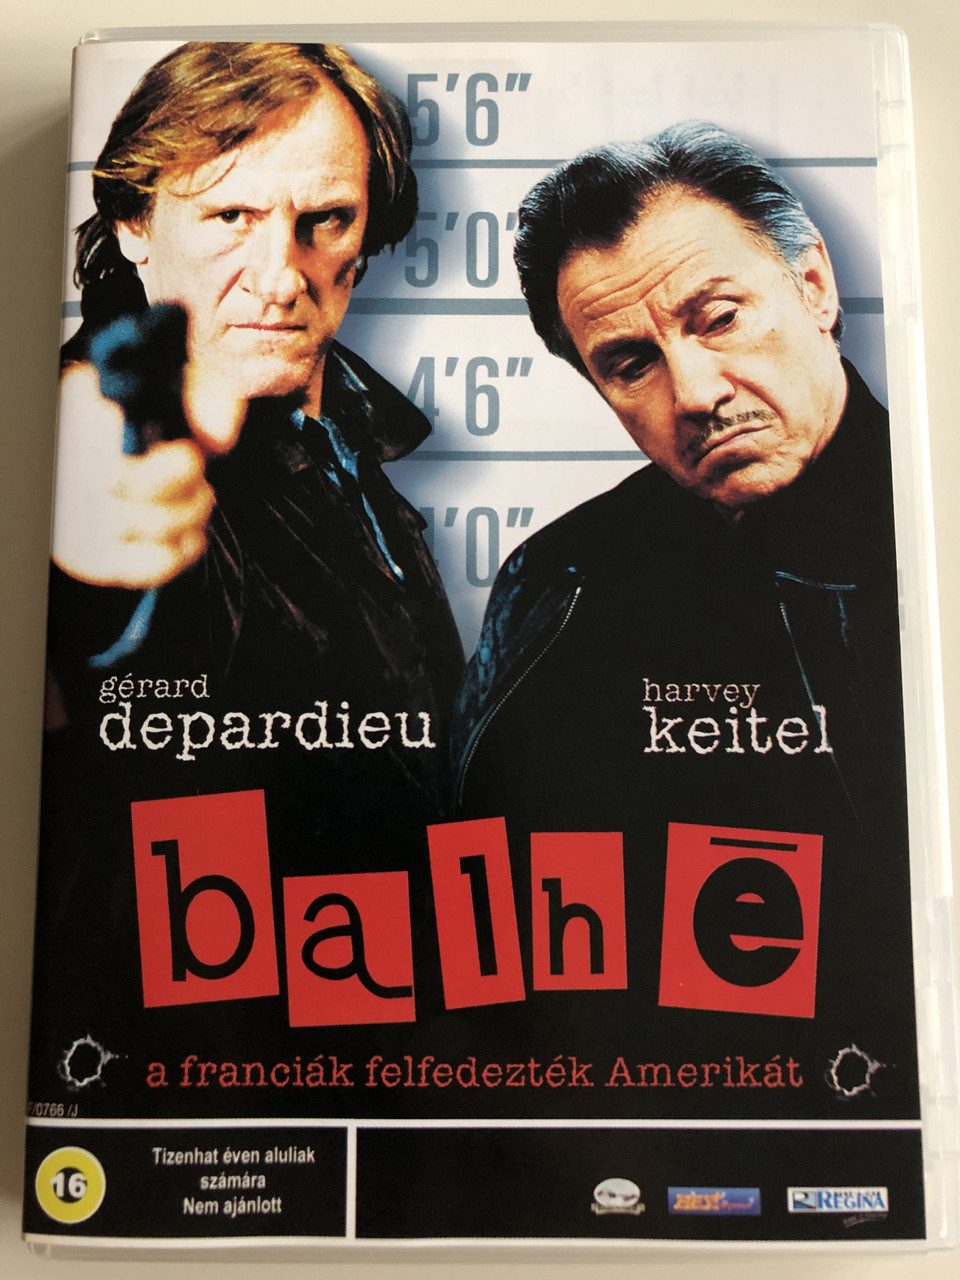 BALHÉ DVD 2003 CRIME SPREE (WANTED) / Directed by Brad Mirman / Starring:  Gérard Depardieu, Harvey Keitel, Johnny Hallyday, Renaud - bibleinmylanguage